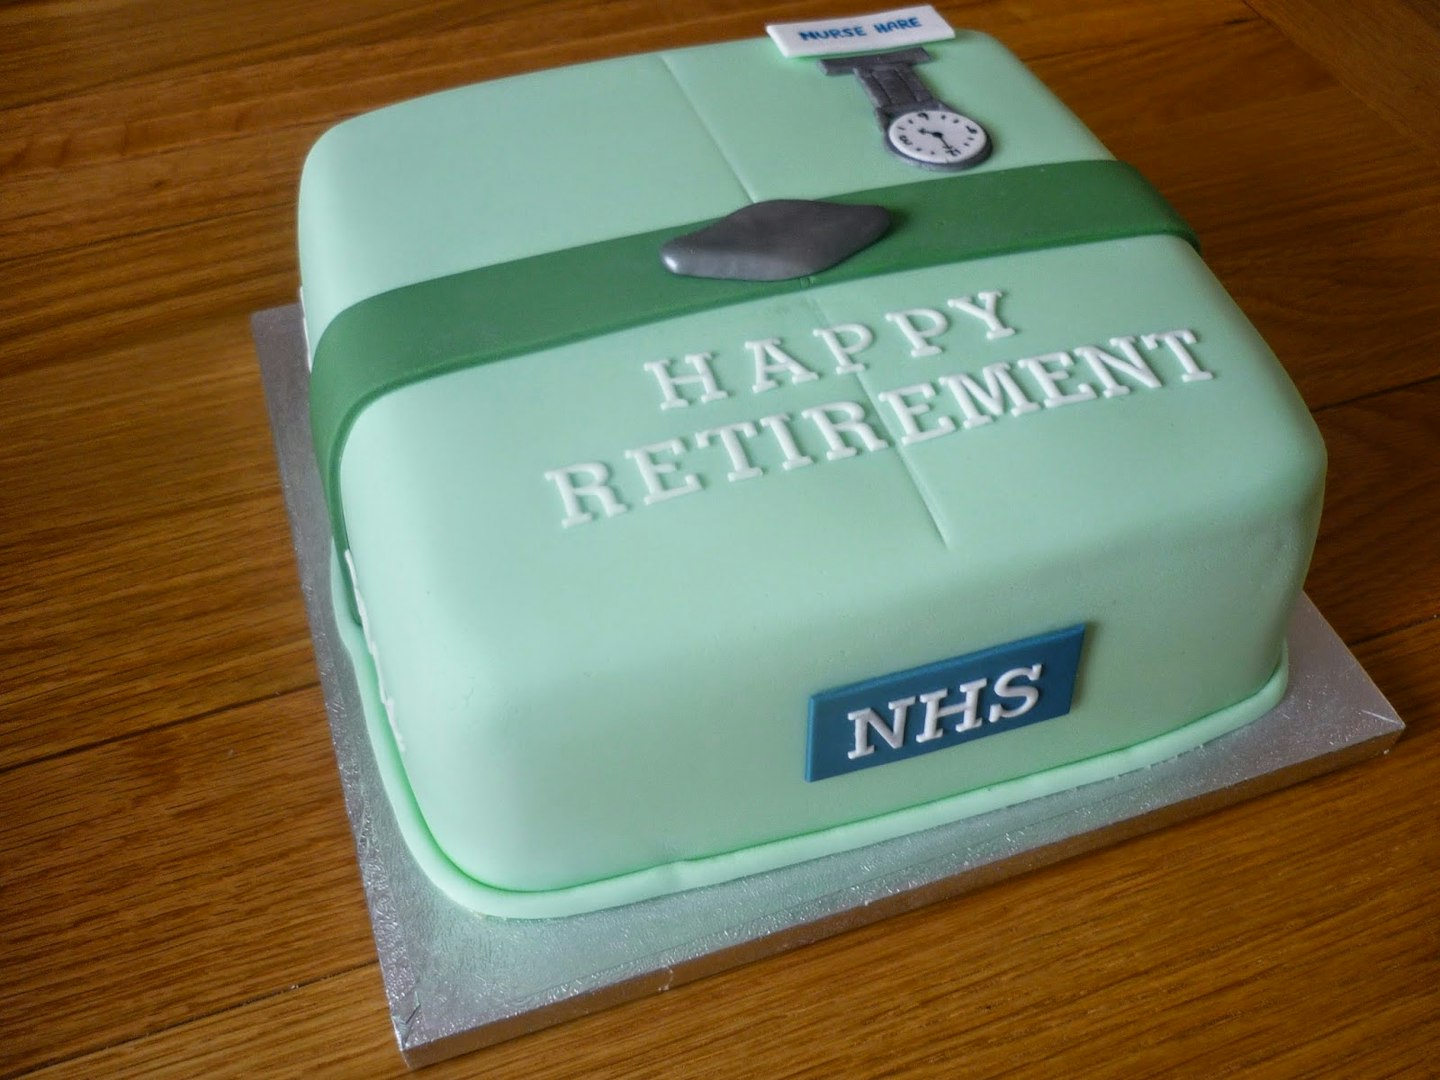 Retirement Cake Ideas To Celebrate The